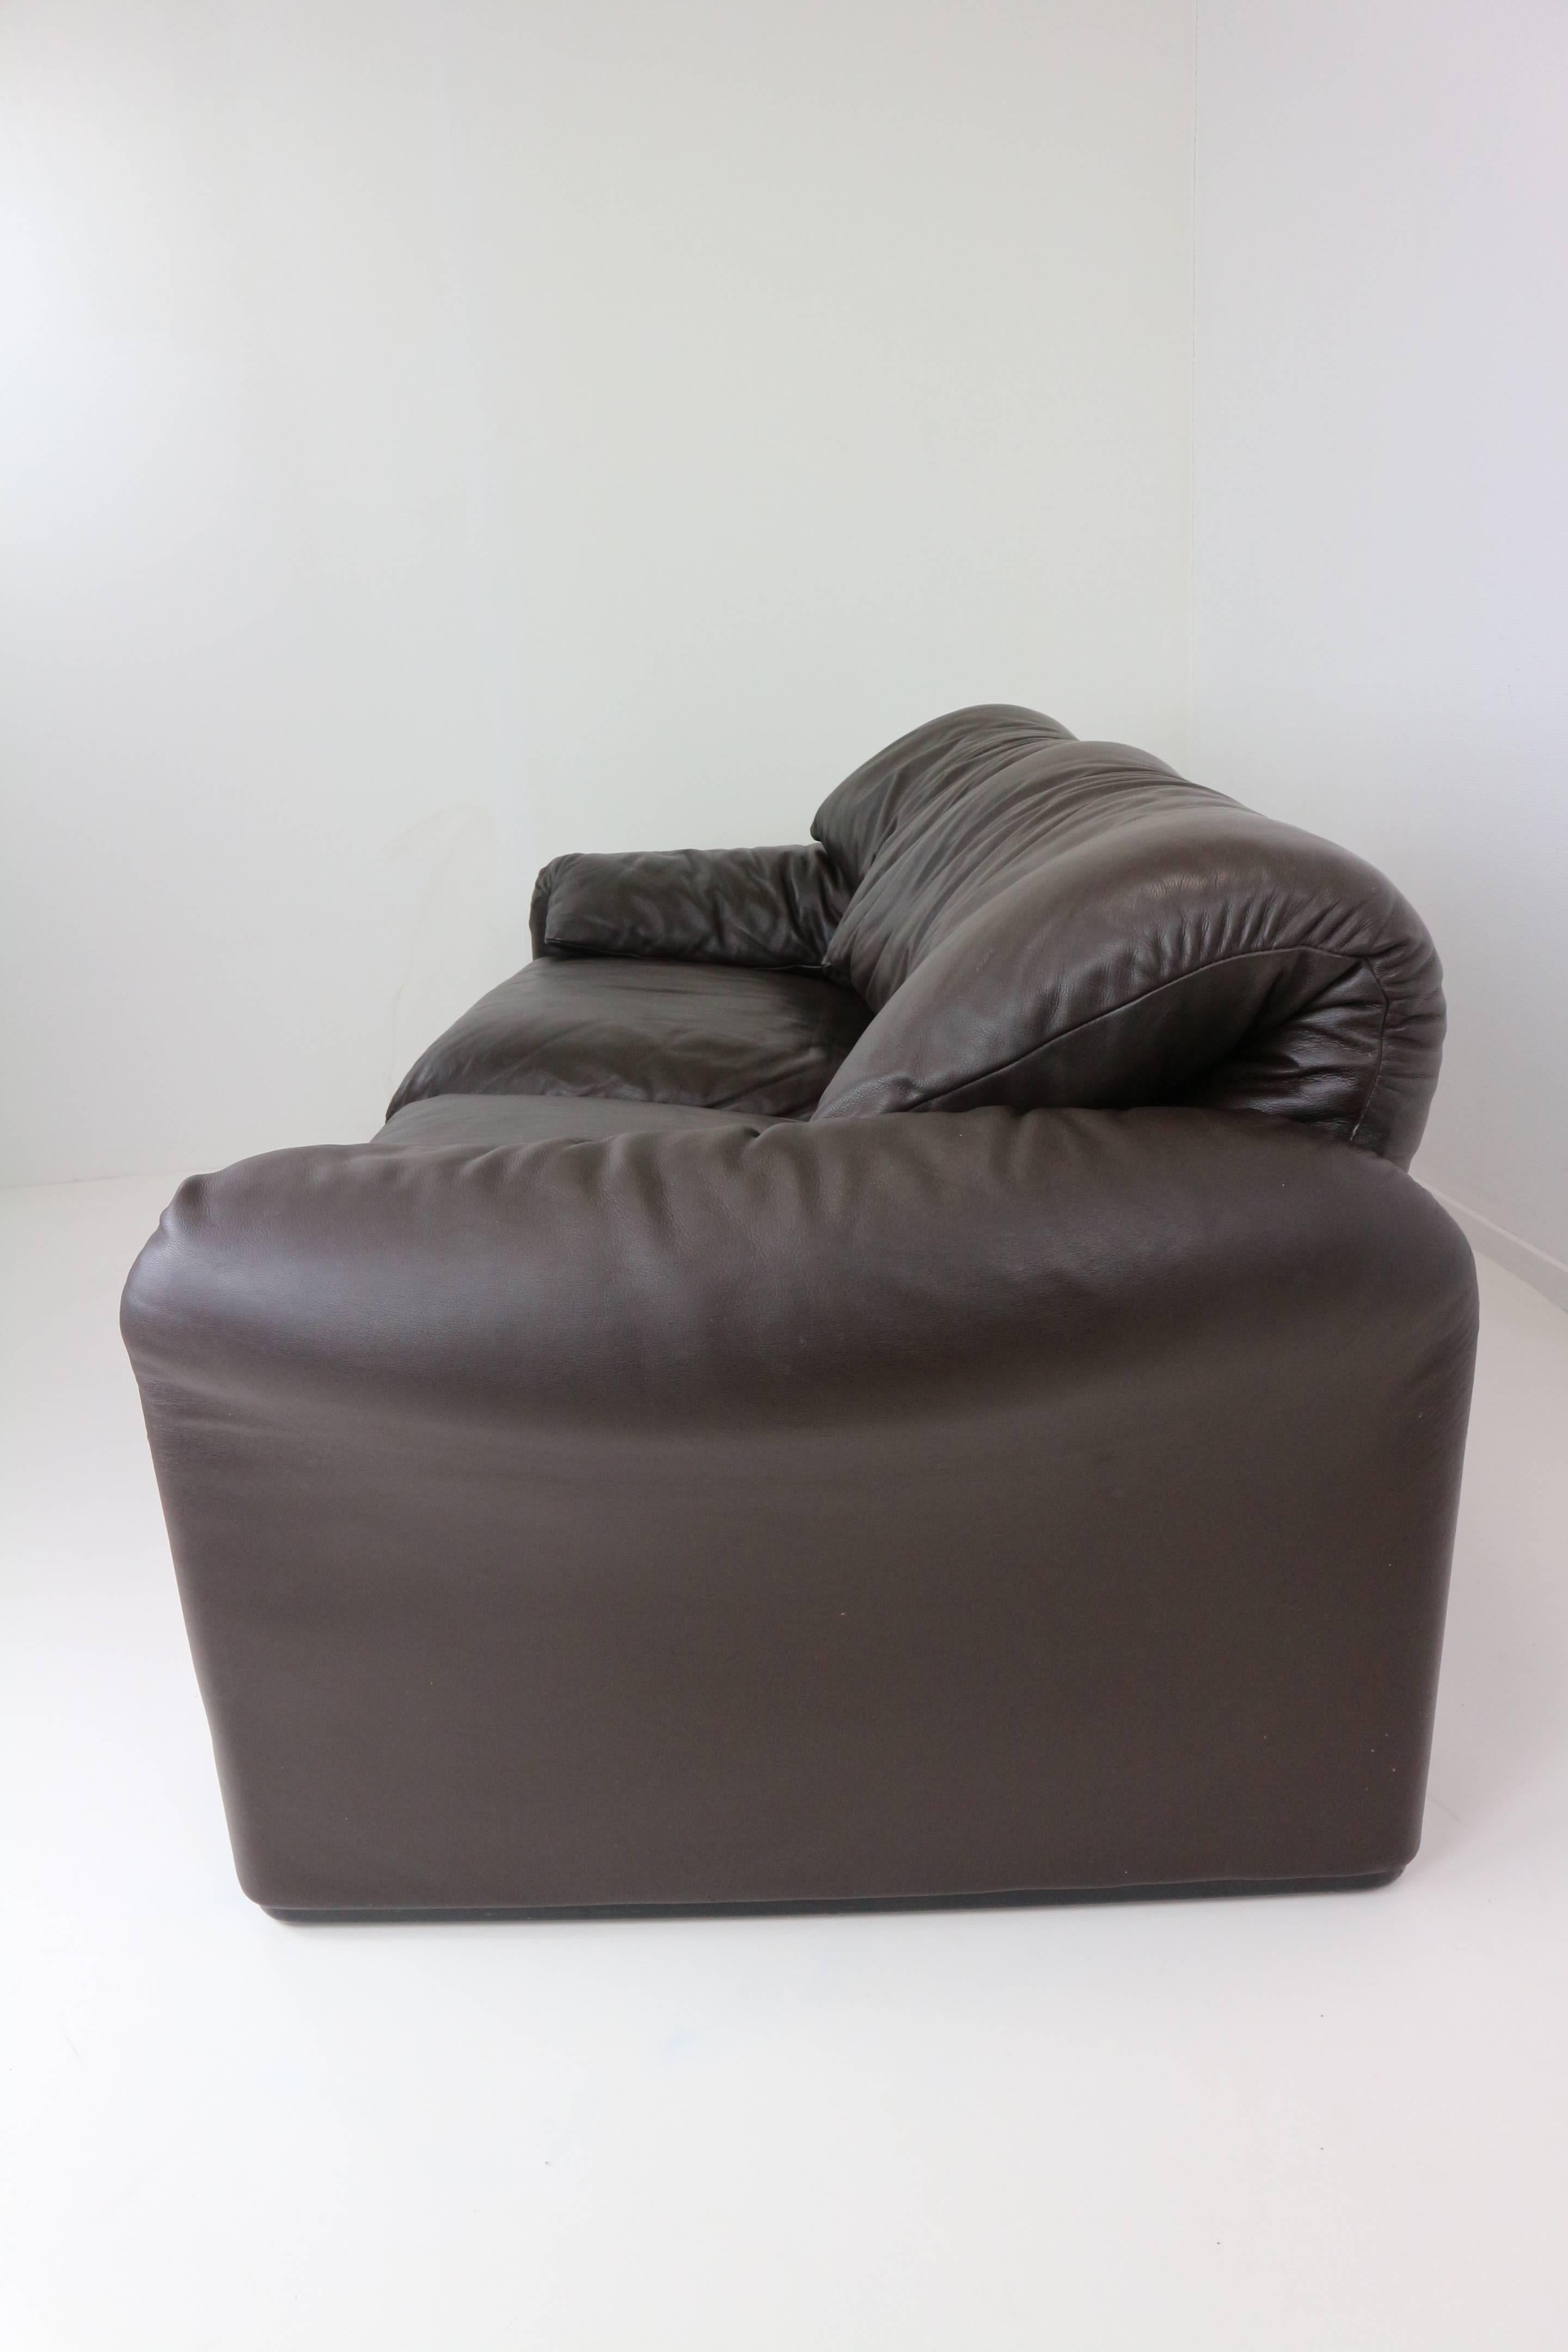 Italian Leather Two-Seat Maralunga Design by Vico Magistretti for Cassina